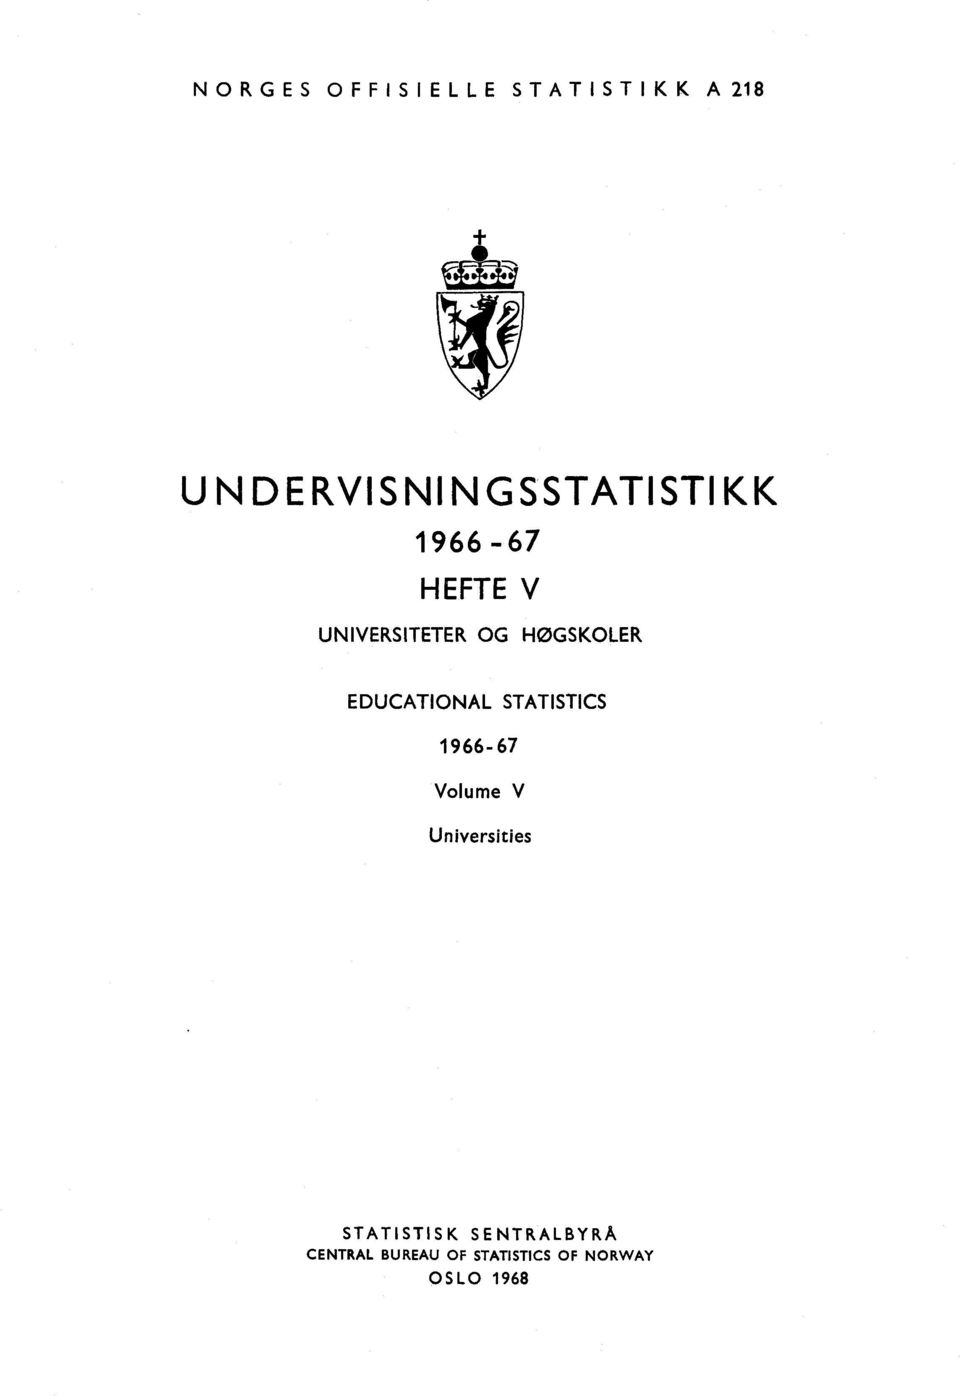 HØGSKOLER EDUCATIONAL STATISTICS Volume V